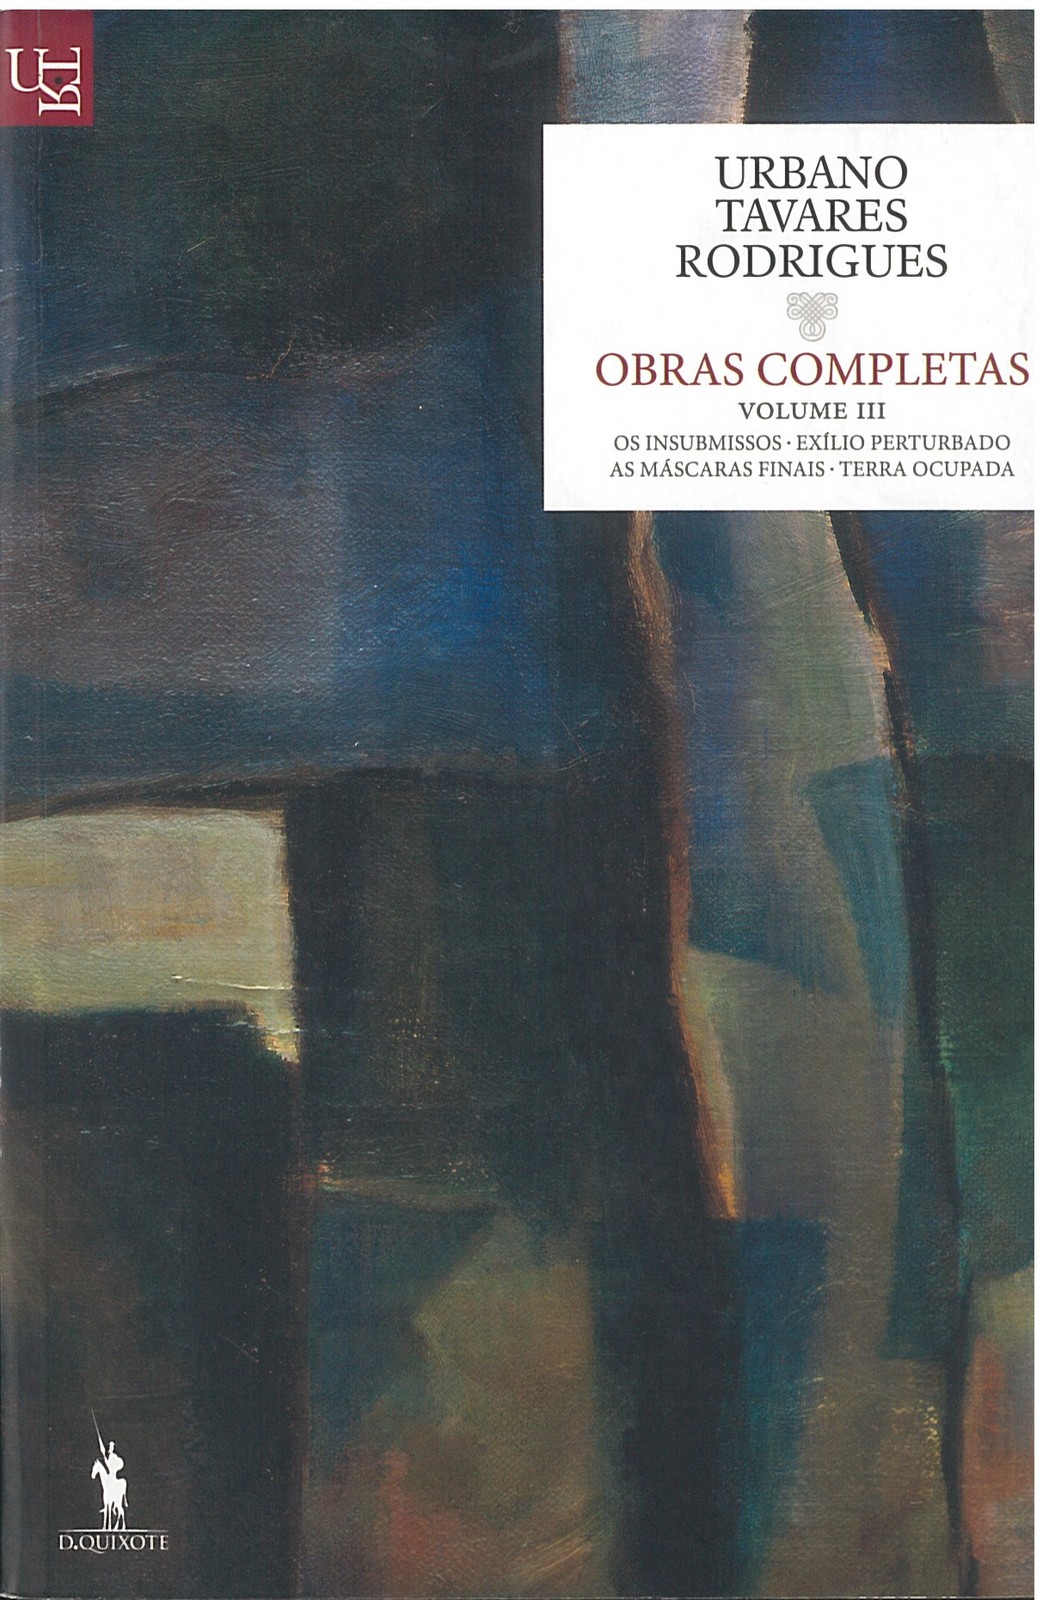 Urbano Tavares Rodrigues - Obras Completas, III